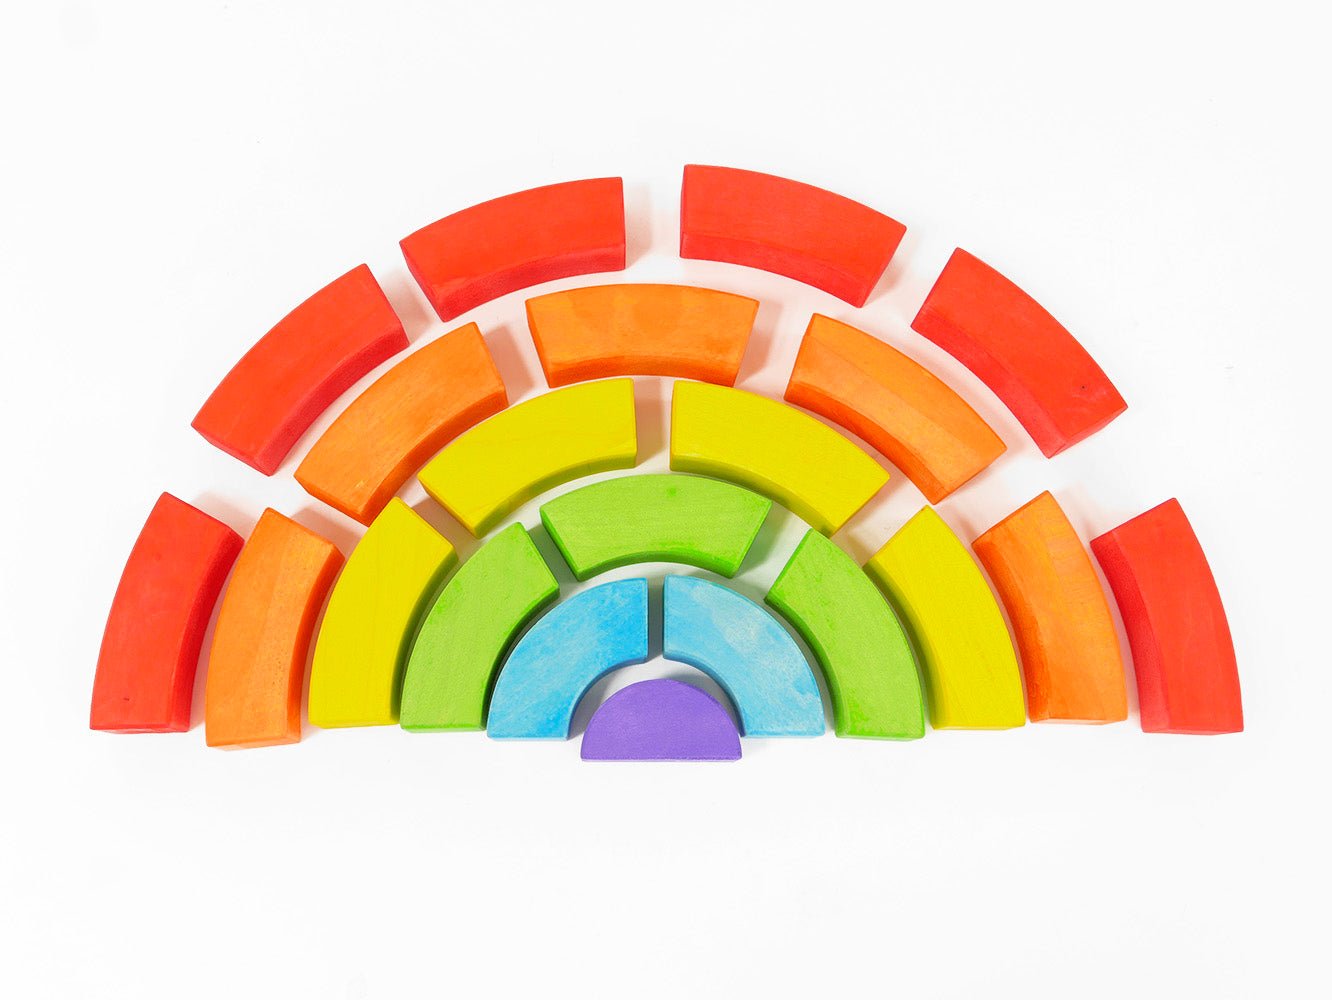 Rainbow blocks - Koko-Kamel.com